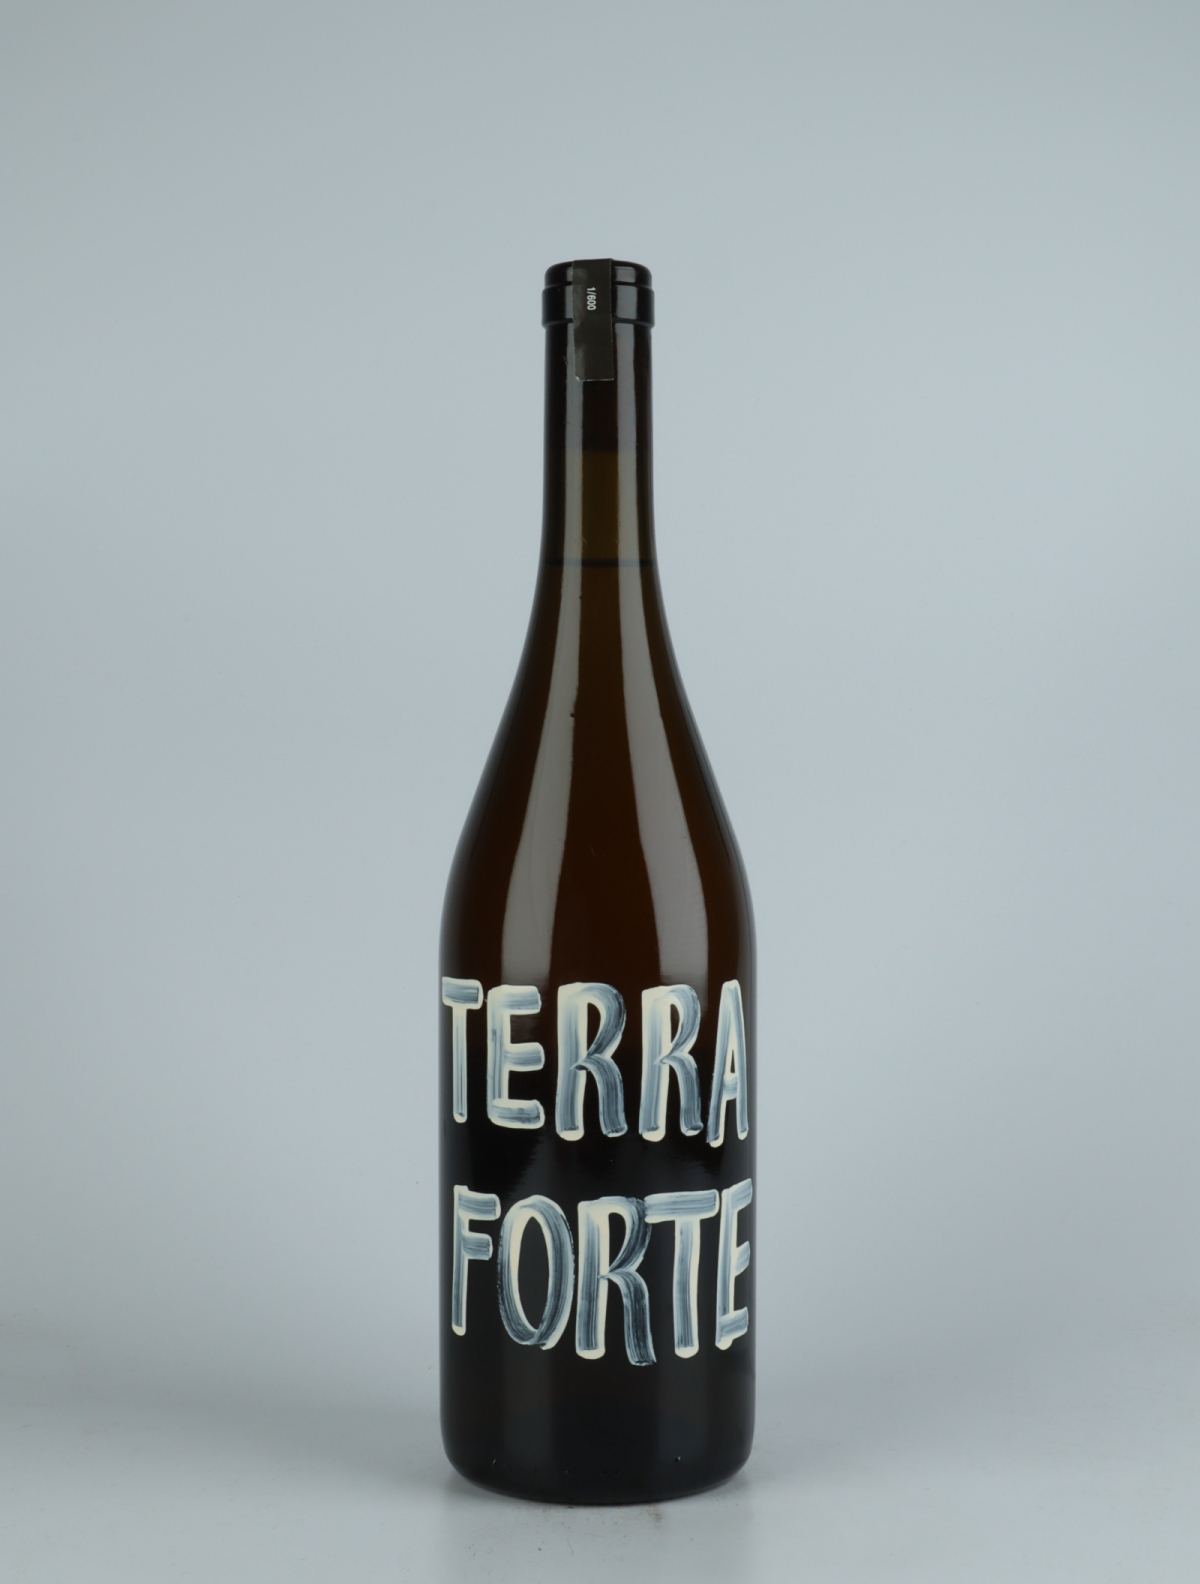 A bottle 2021 Terra Forte Orange wine from Tanca Nica, Sicily in Italy